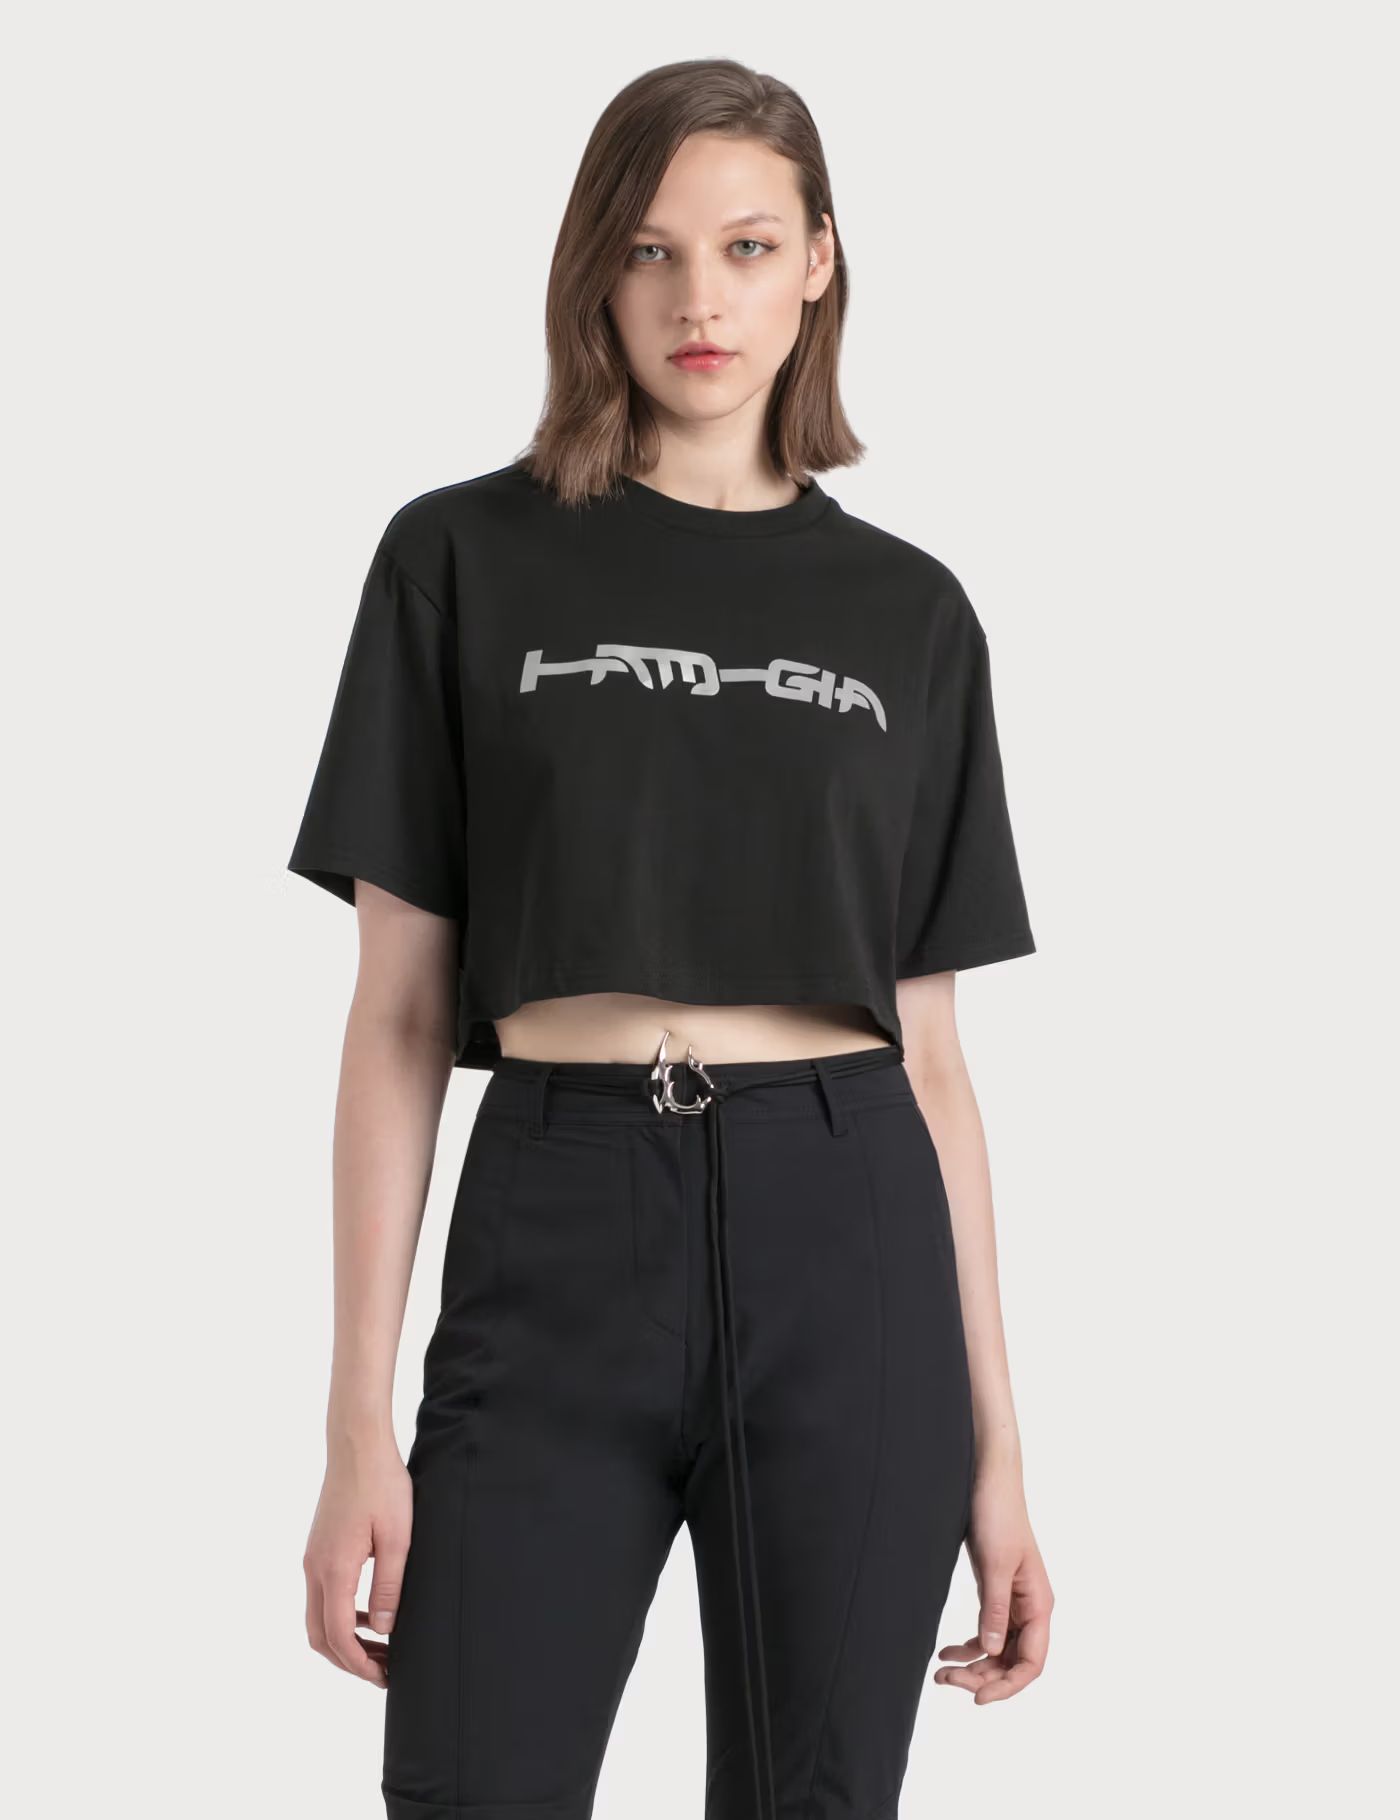 I.AM.GIA Vesta Cropped T-Shirt | Hypebeast